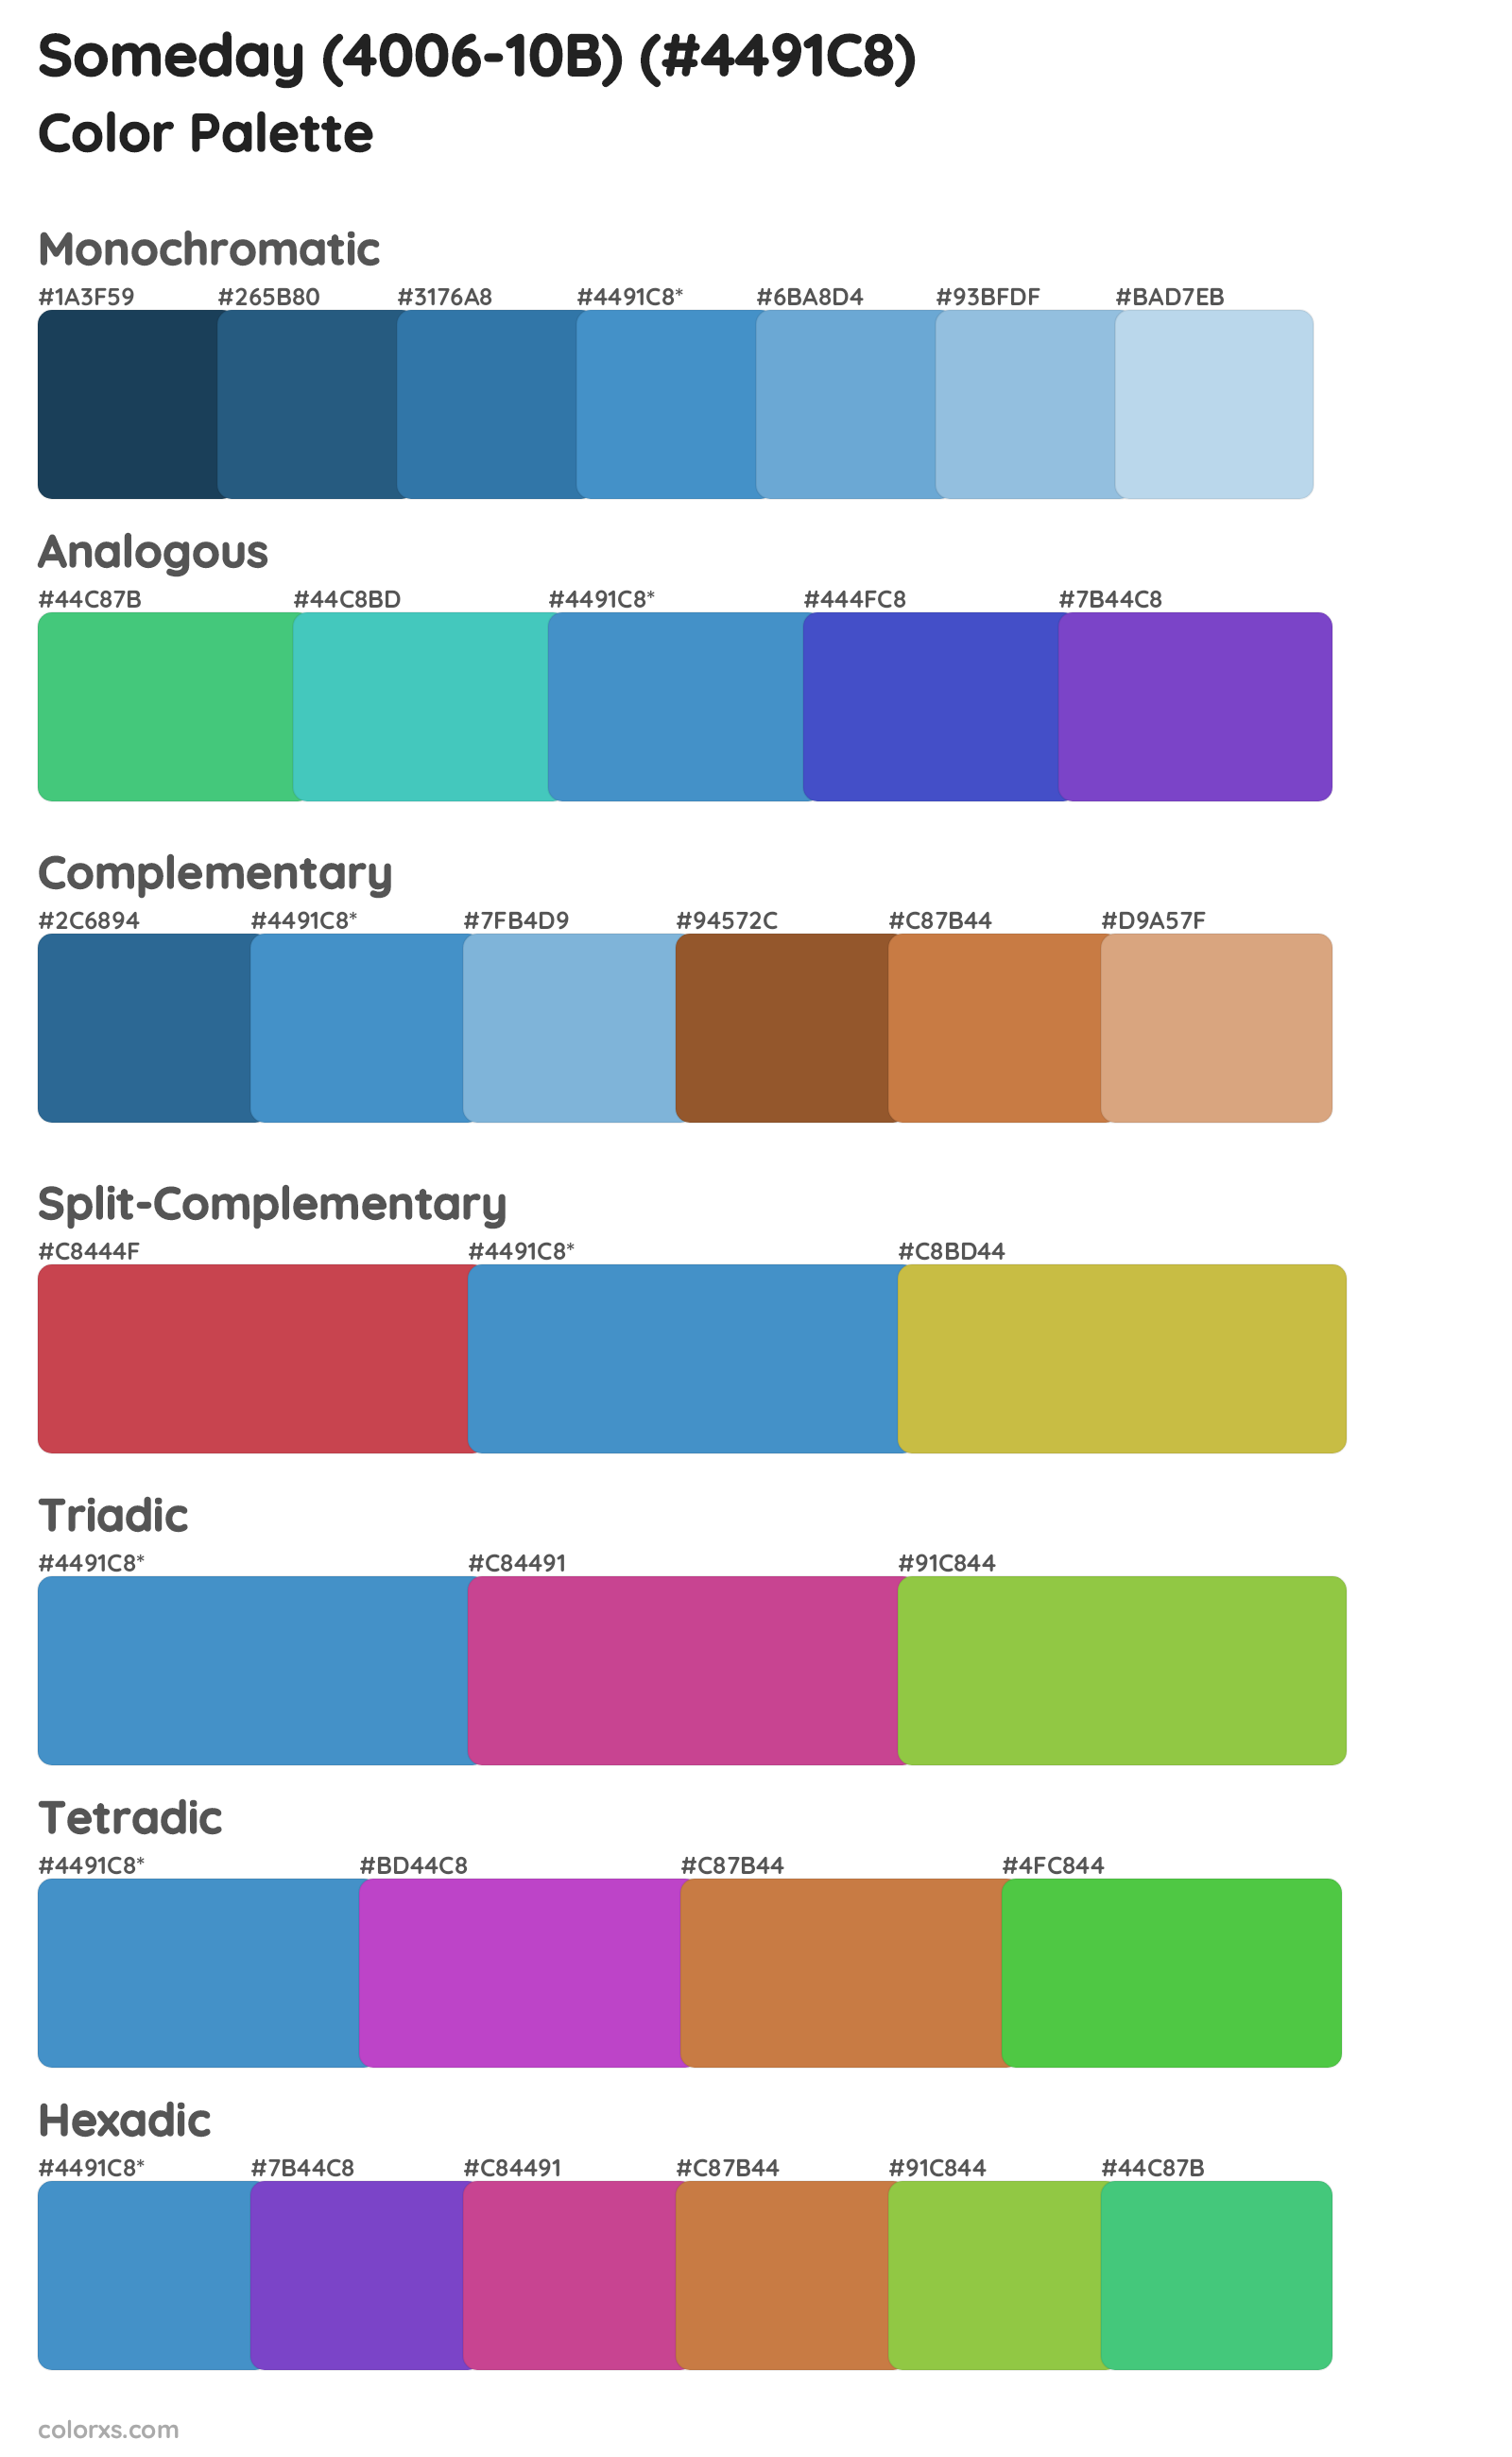 Someday (4006-10B) Color Scheme Palettes